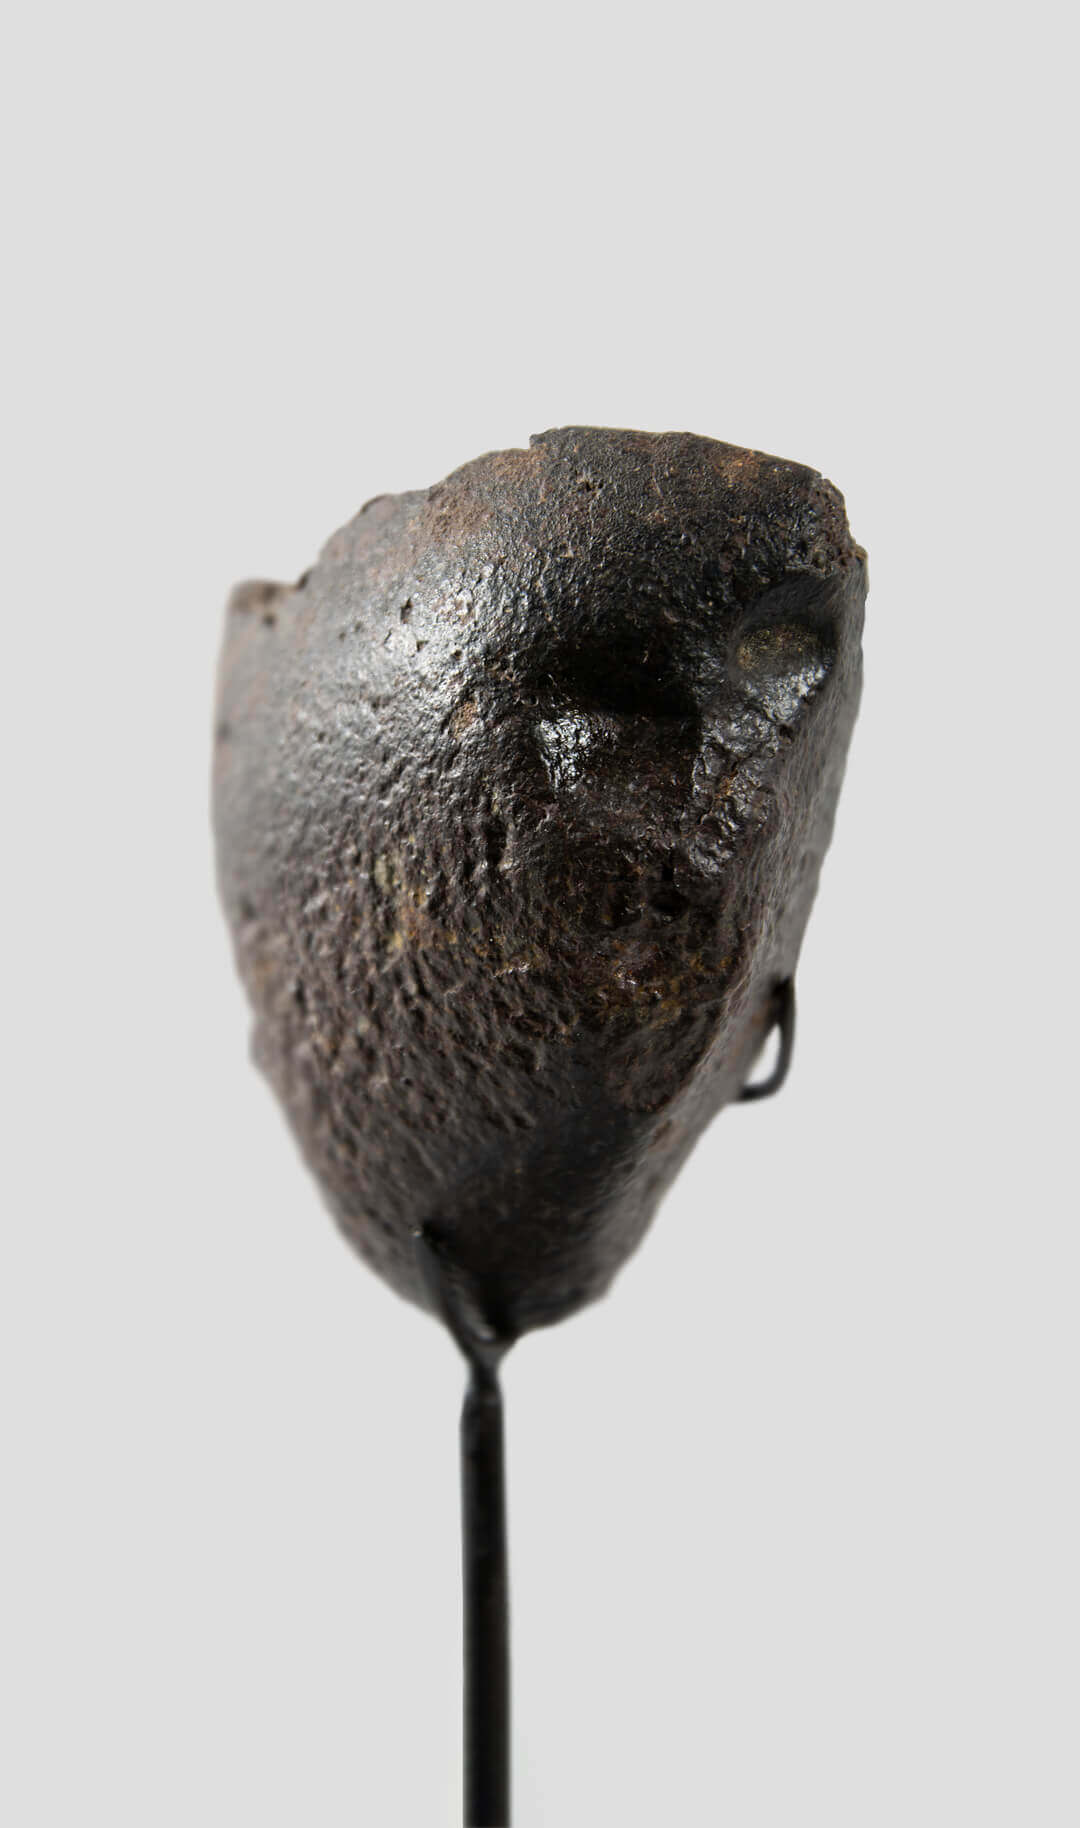 rare h5 nwa meteorite for sale on bronze stand 301